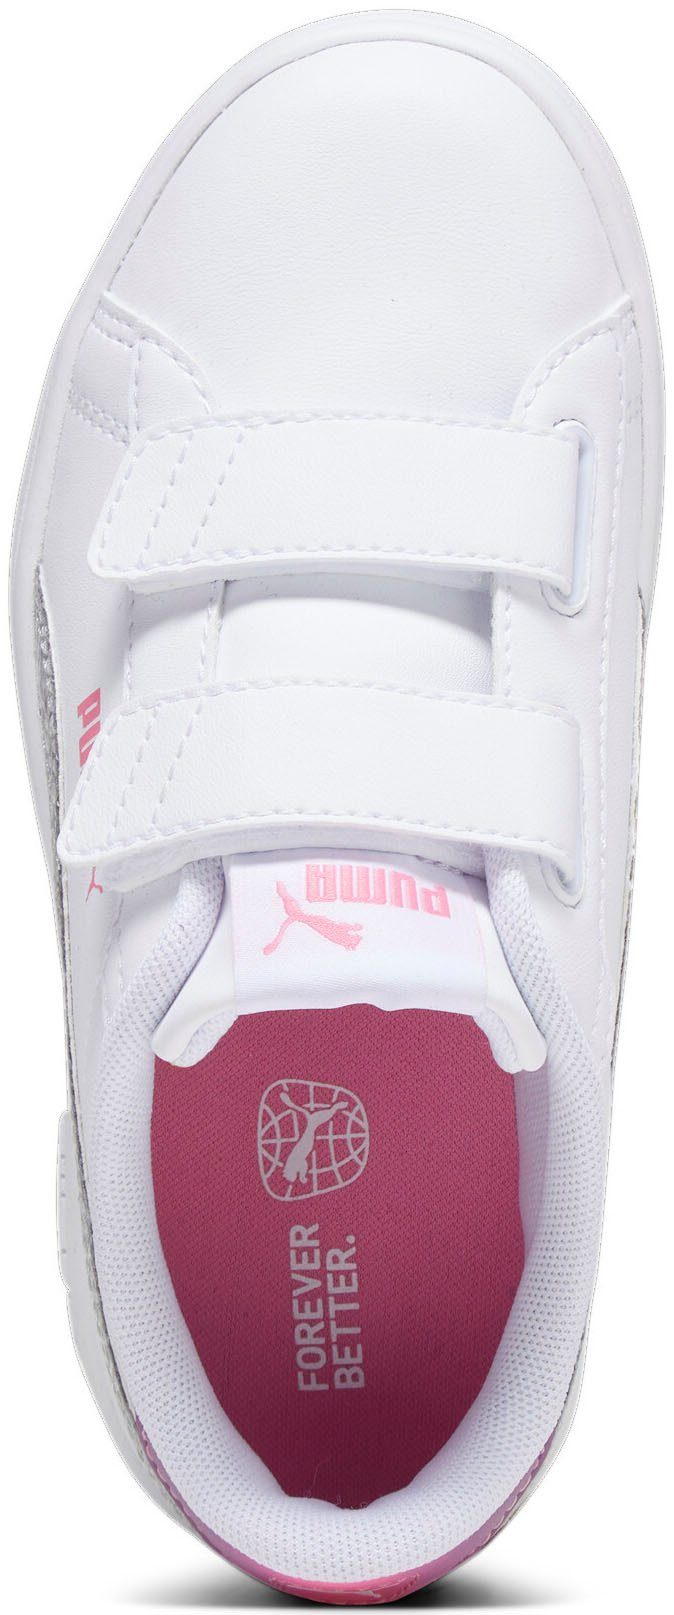 Sneaker 3.0 White-PUMA STAR Pop PS PUMA Silver-Strawberry Burst-Purple GLOW V PUMA SMASH L